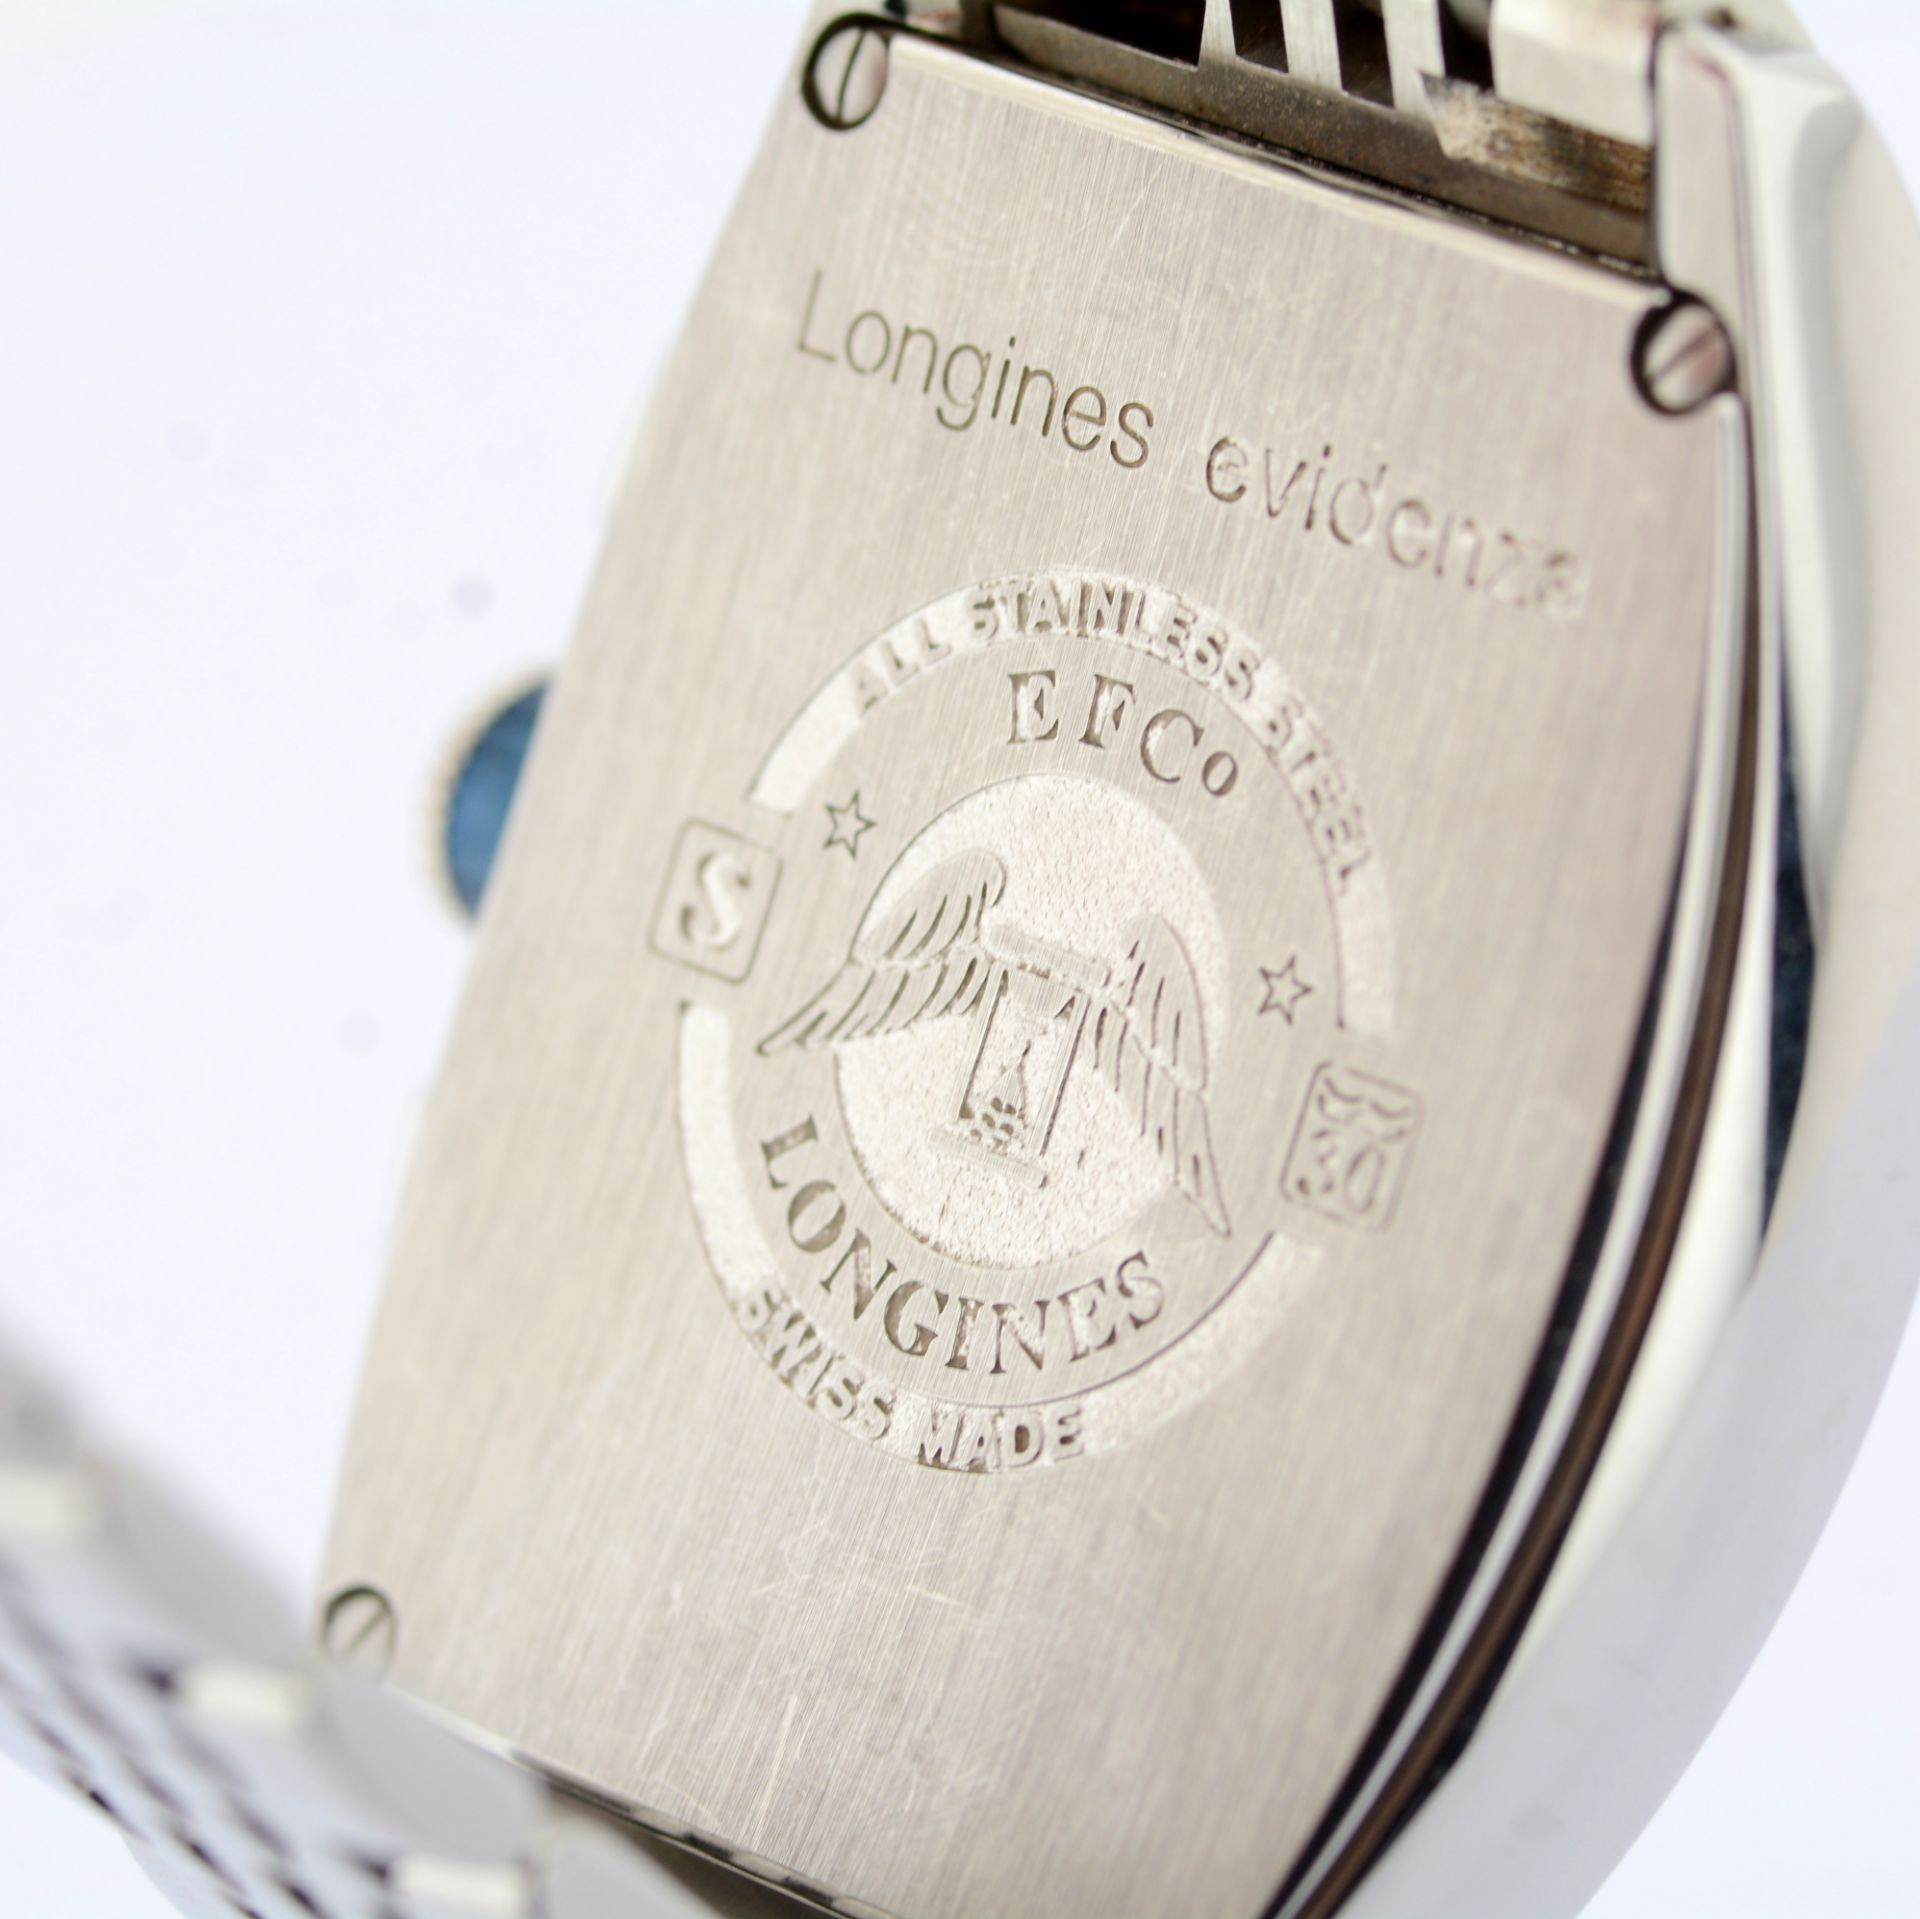 Longines / Longines Evidenza XL 56 mm Chronographe Day Date - Gentlmen's Steel Wrist Watch - Image 5 of 7